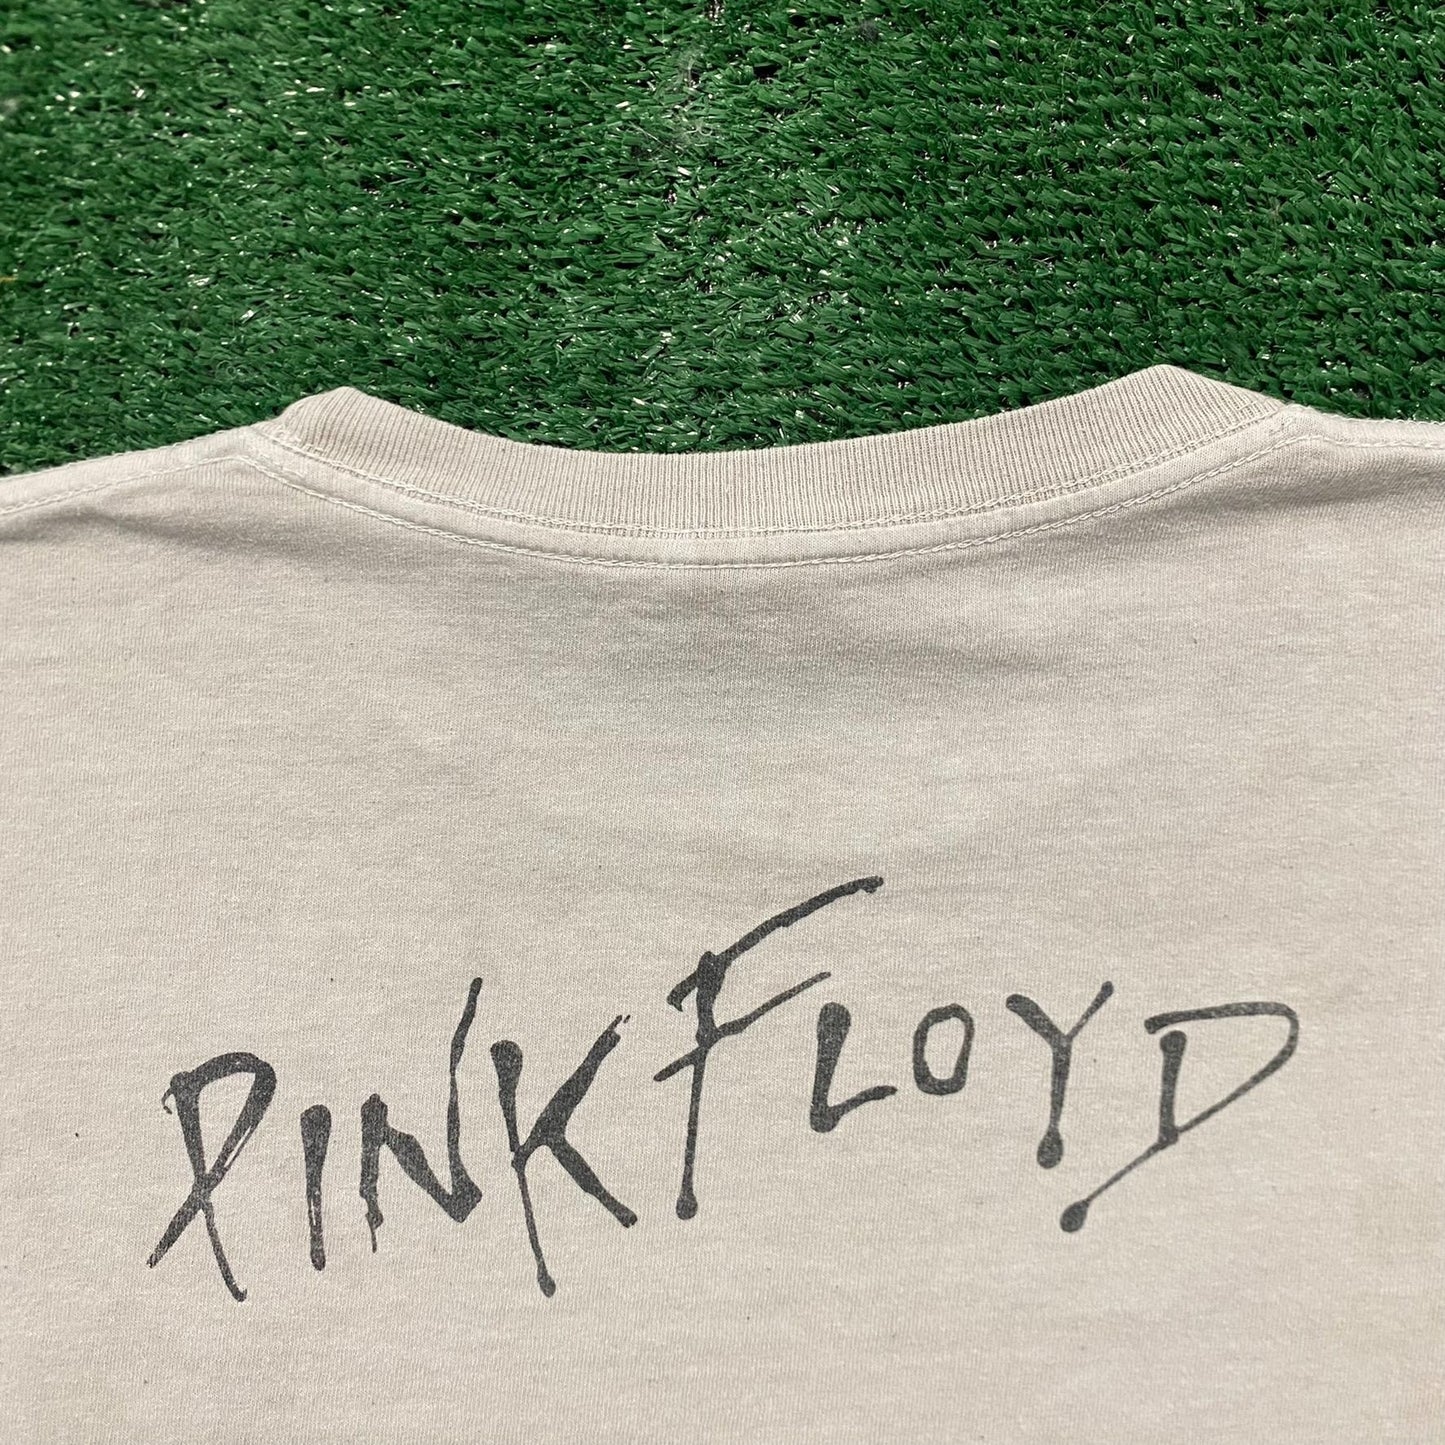 Vintage Y2K Pink Floyd The Wall Essential Rock Band T-Shirt